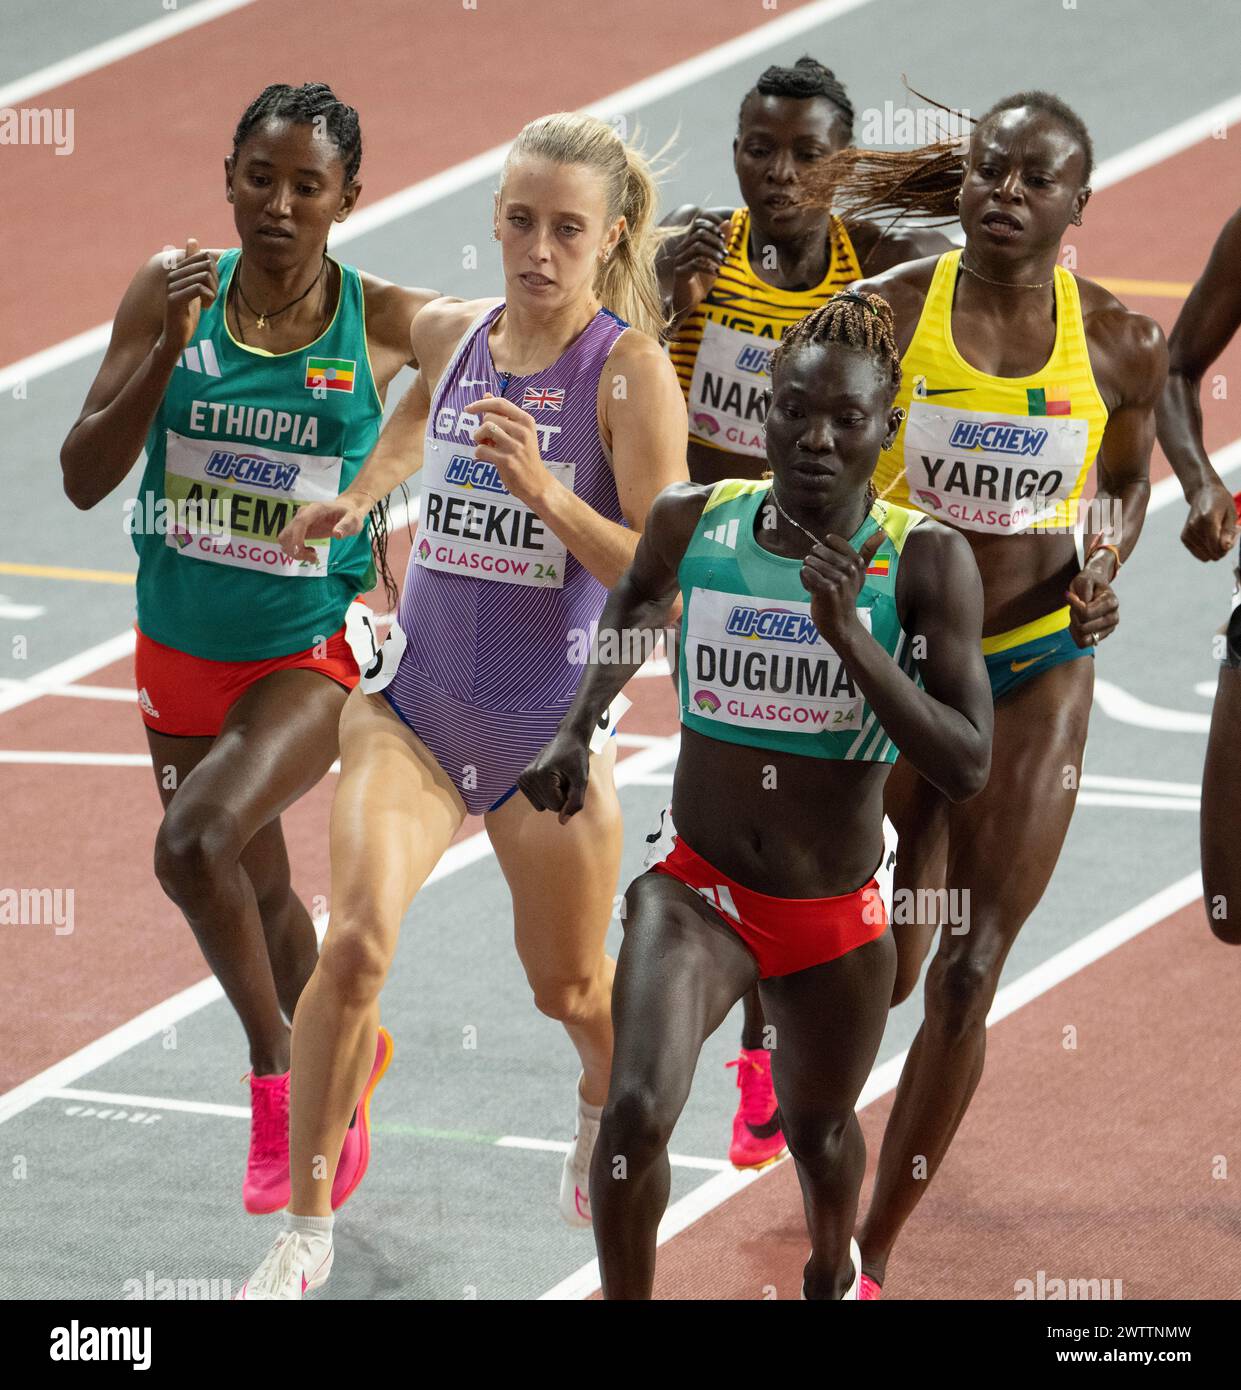 Habitam Alemu and Tsige Duguma of Ethiopia, Jemma Reekie of Great Britain competing in the women’s 800m final at the World Athletics Indoor Championsh Stock Photo